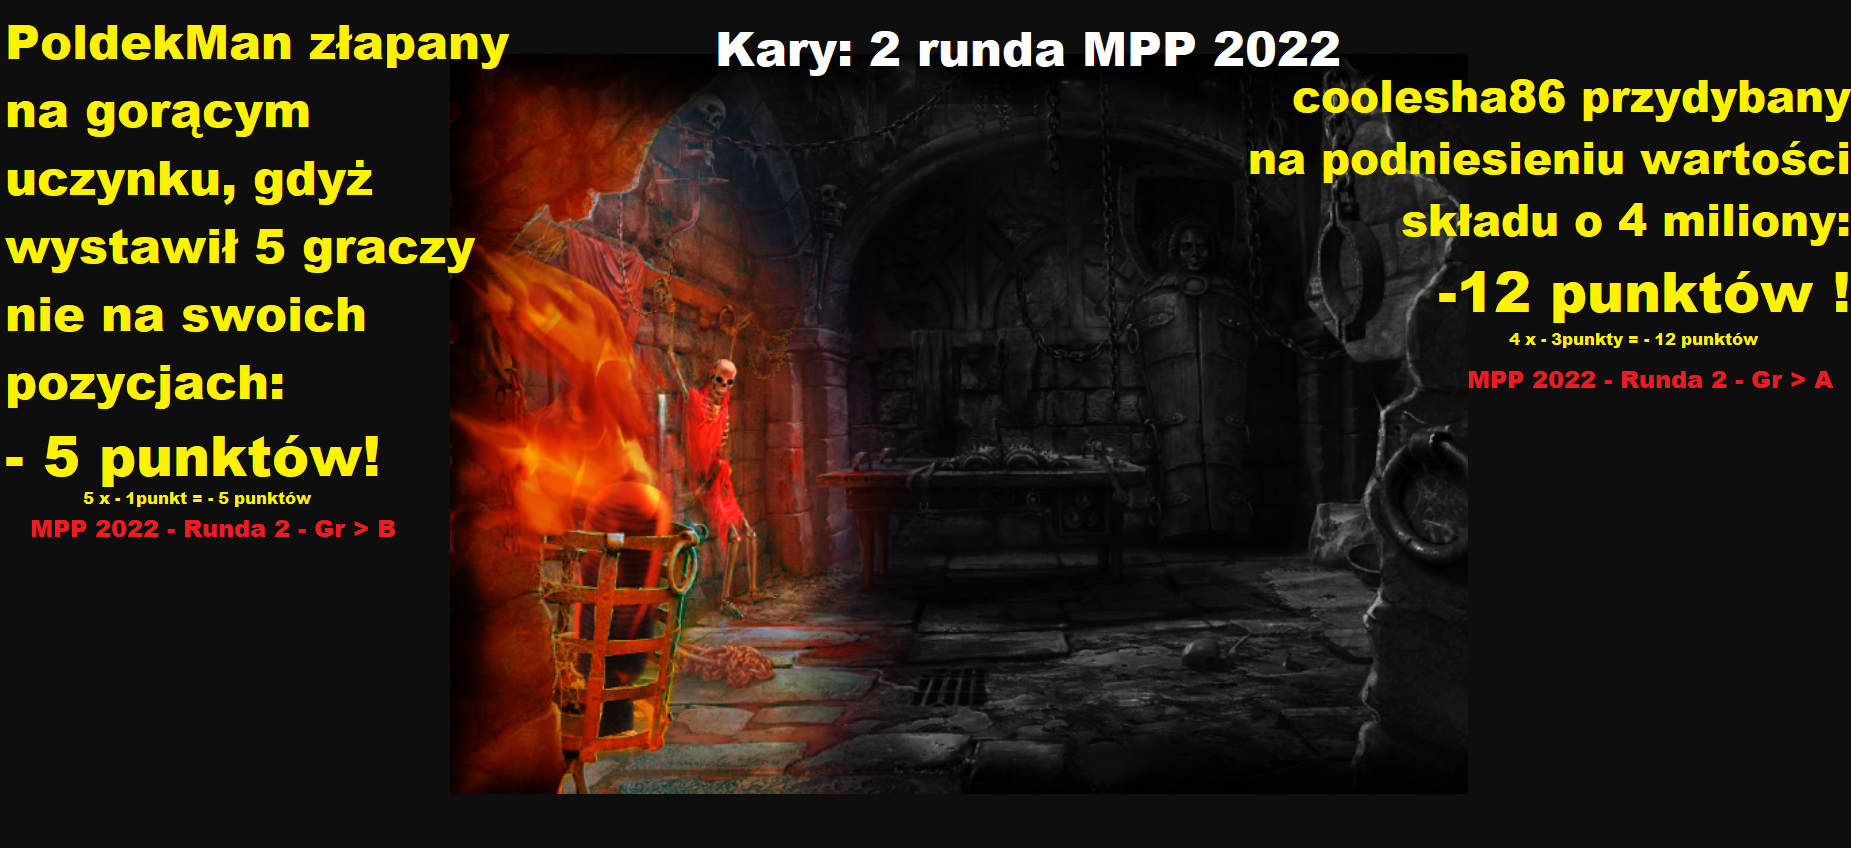 kary 2 runda MPP 2022.png